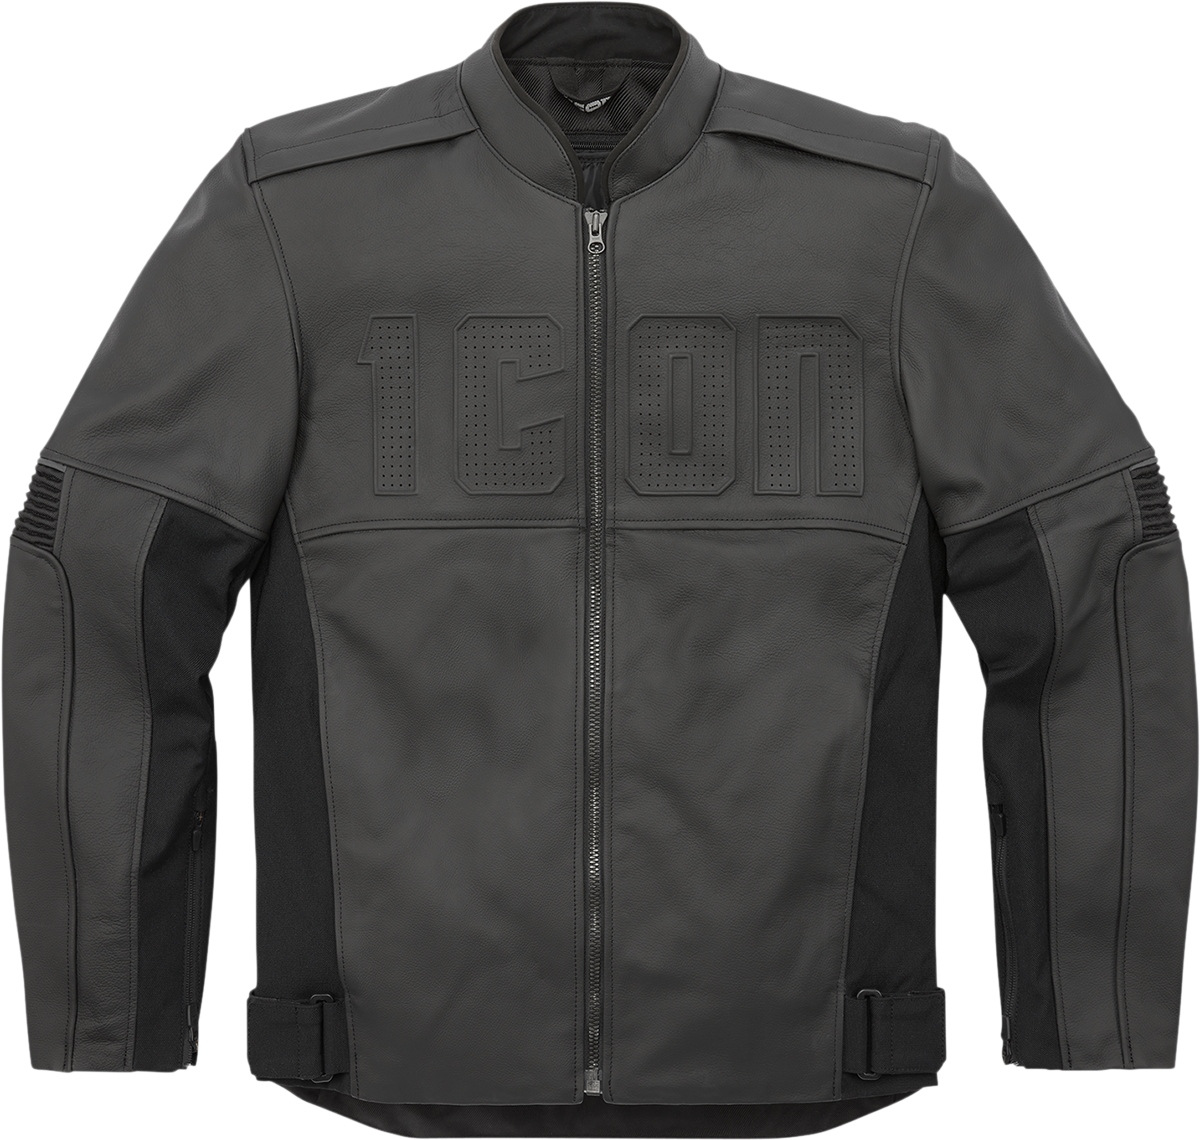 ICON Motorhead3™ Jacket - Black - Small 2810-3854